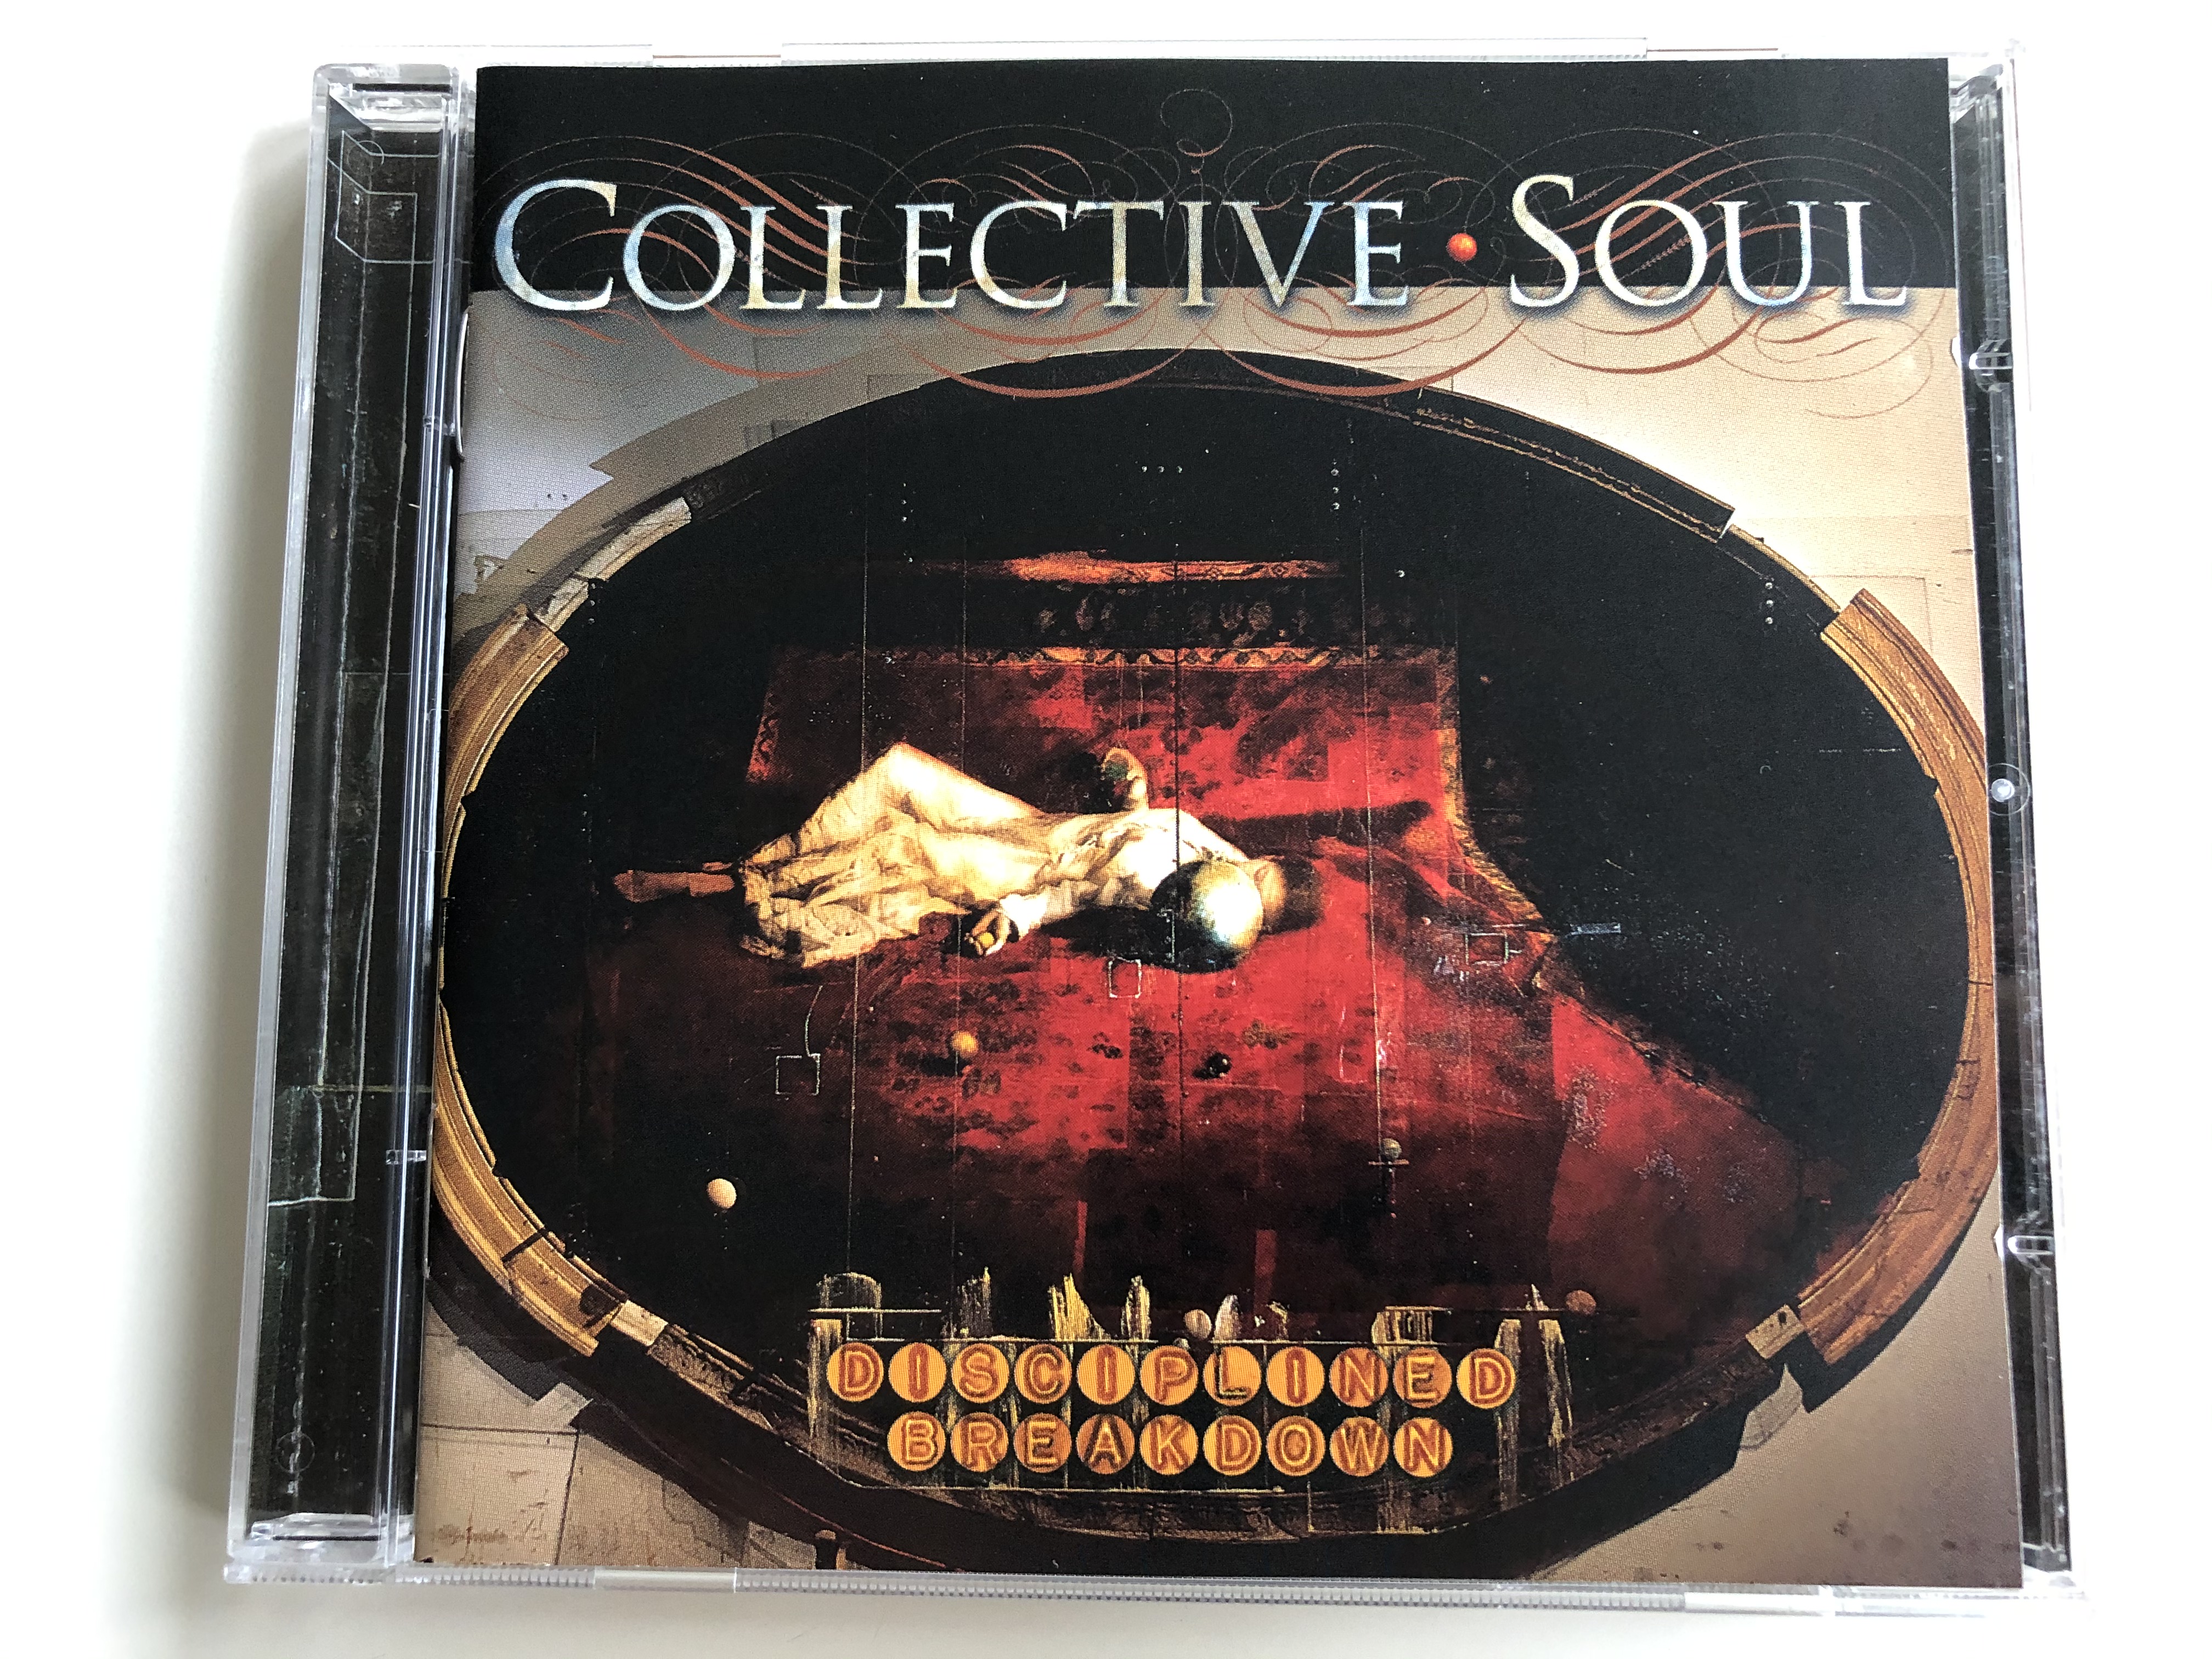 collective-soul-disciplined-breakdown-atlantic-audio-cd-1997-7567-82984-2-1-.jpg